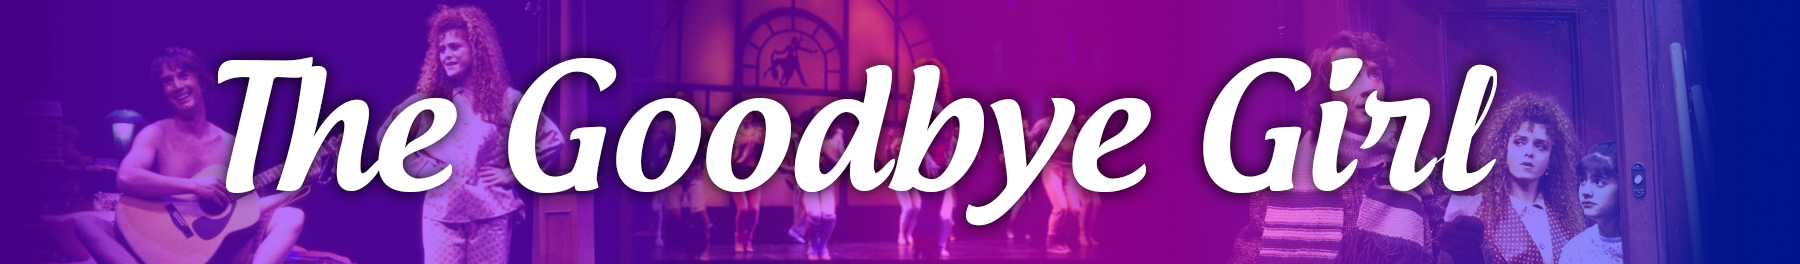 The Goodbye Girl Broadway Show